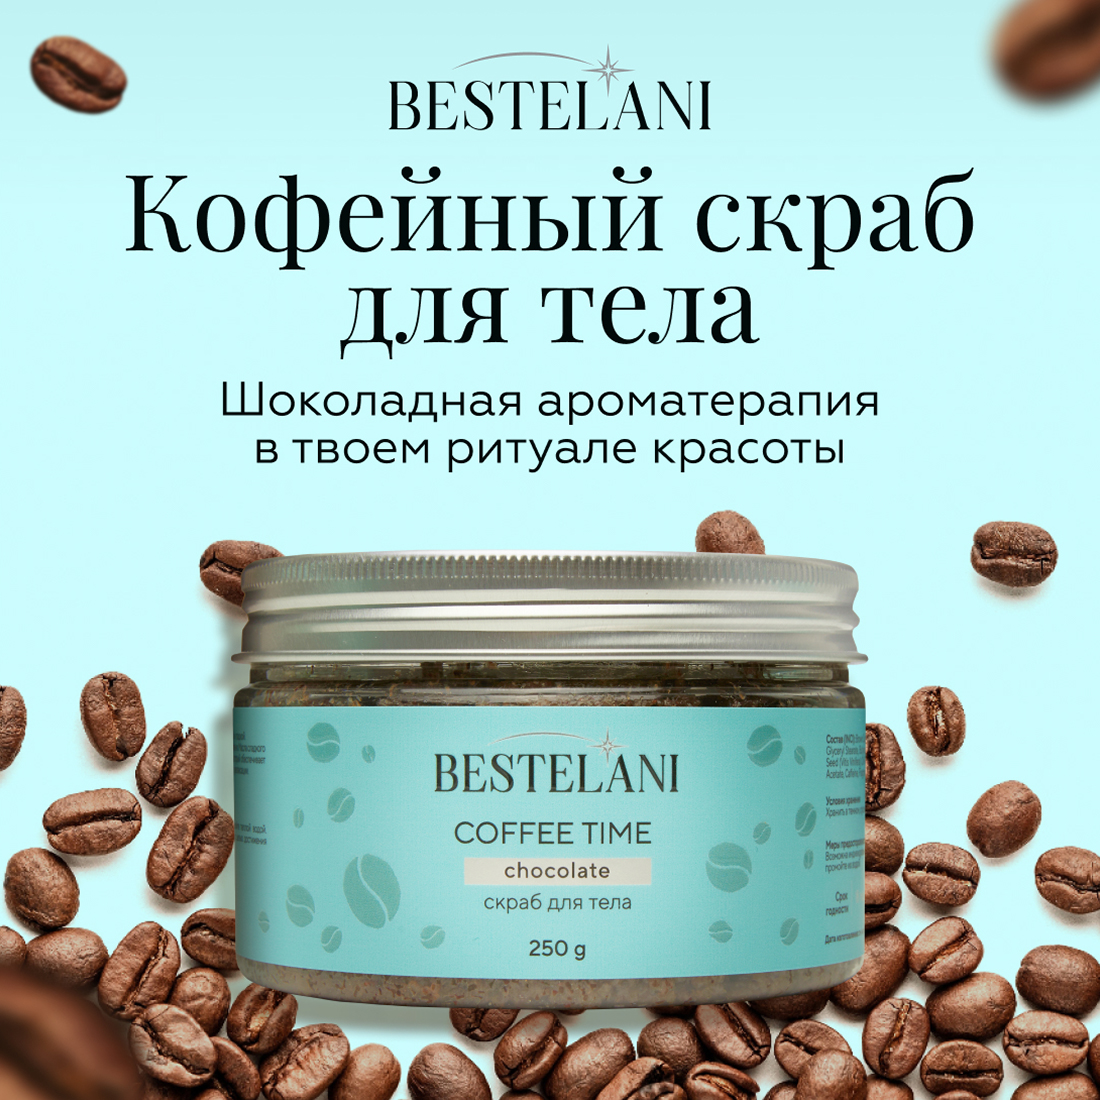 Скраб для тела Bestelani Coffee time 250 г открытка леман coffee time